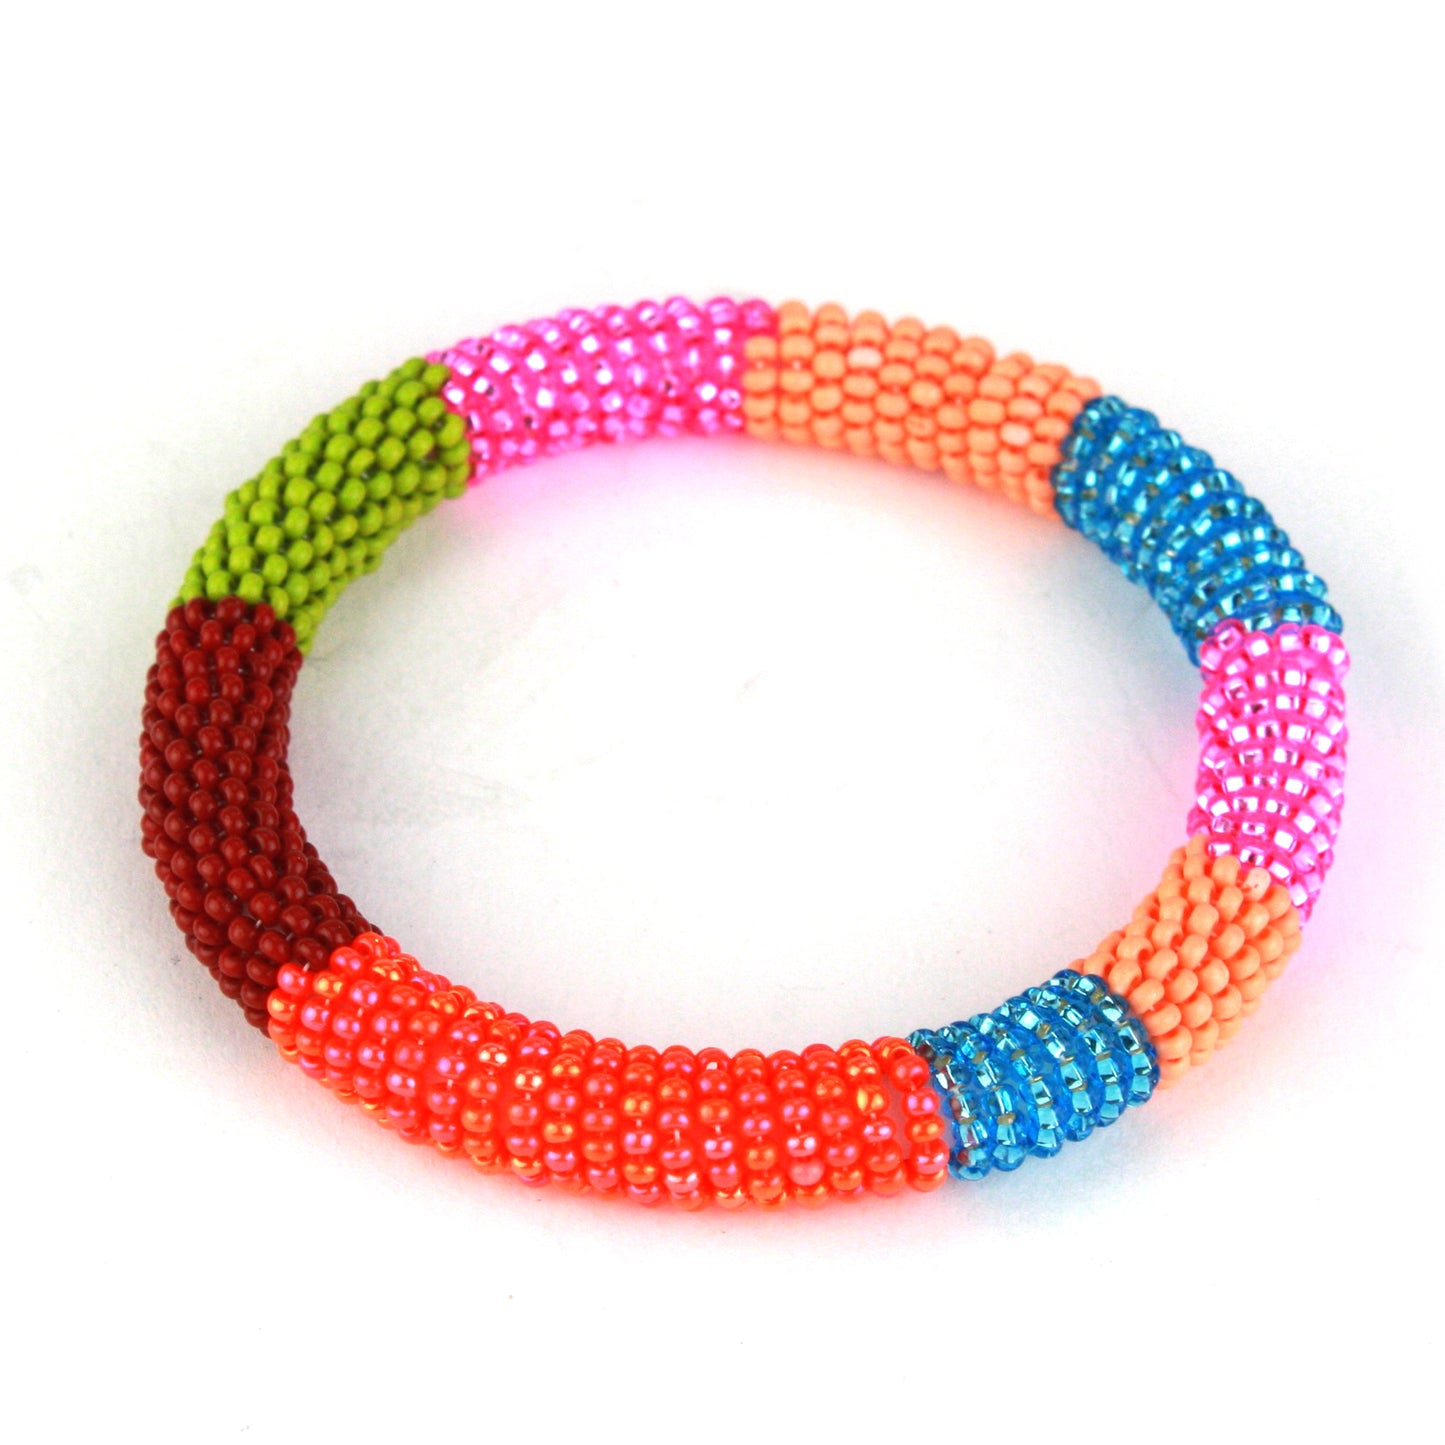 Beaded bracelet - Multi colored